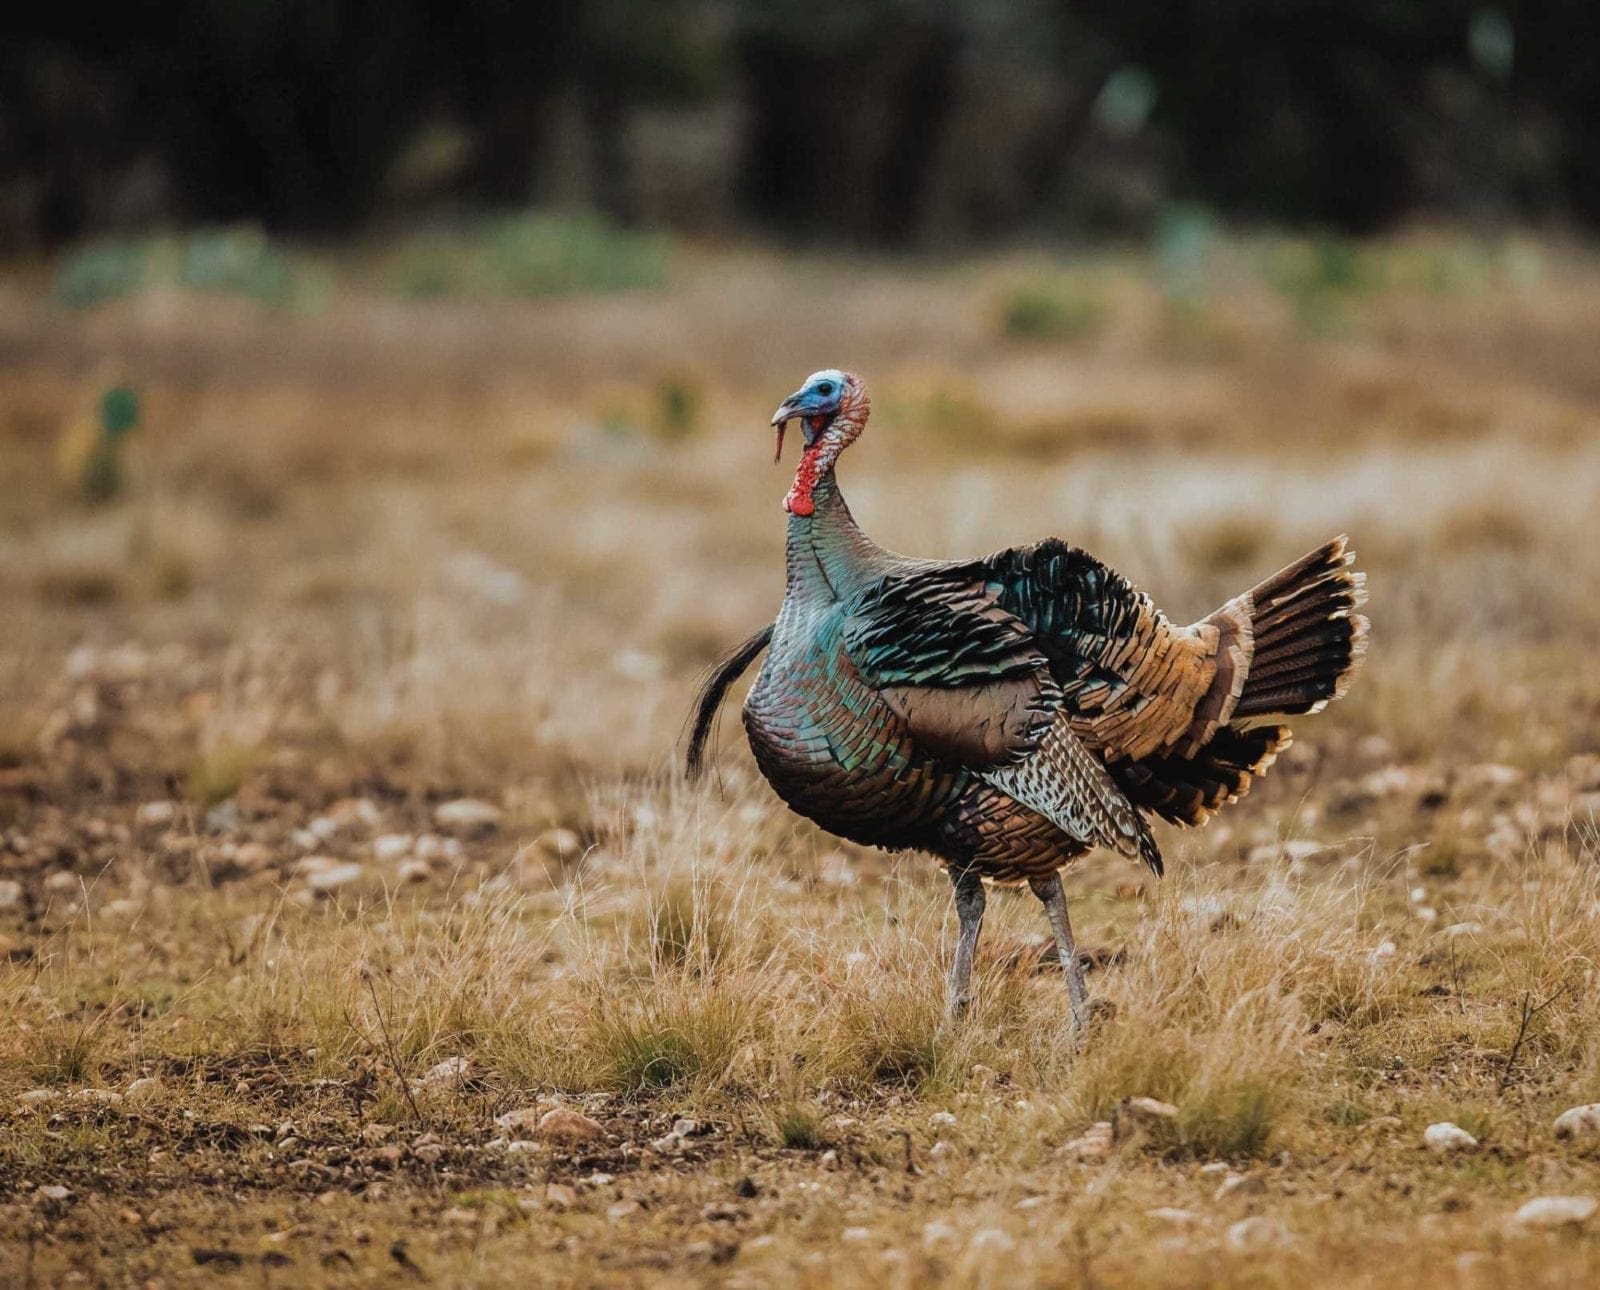 A Rio Grande turkey strutting in a field